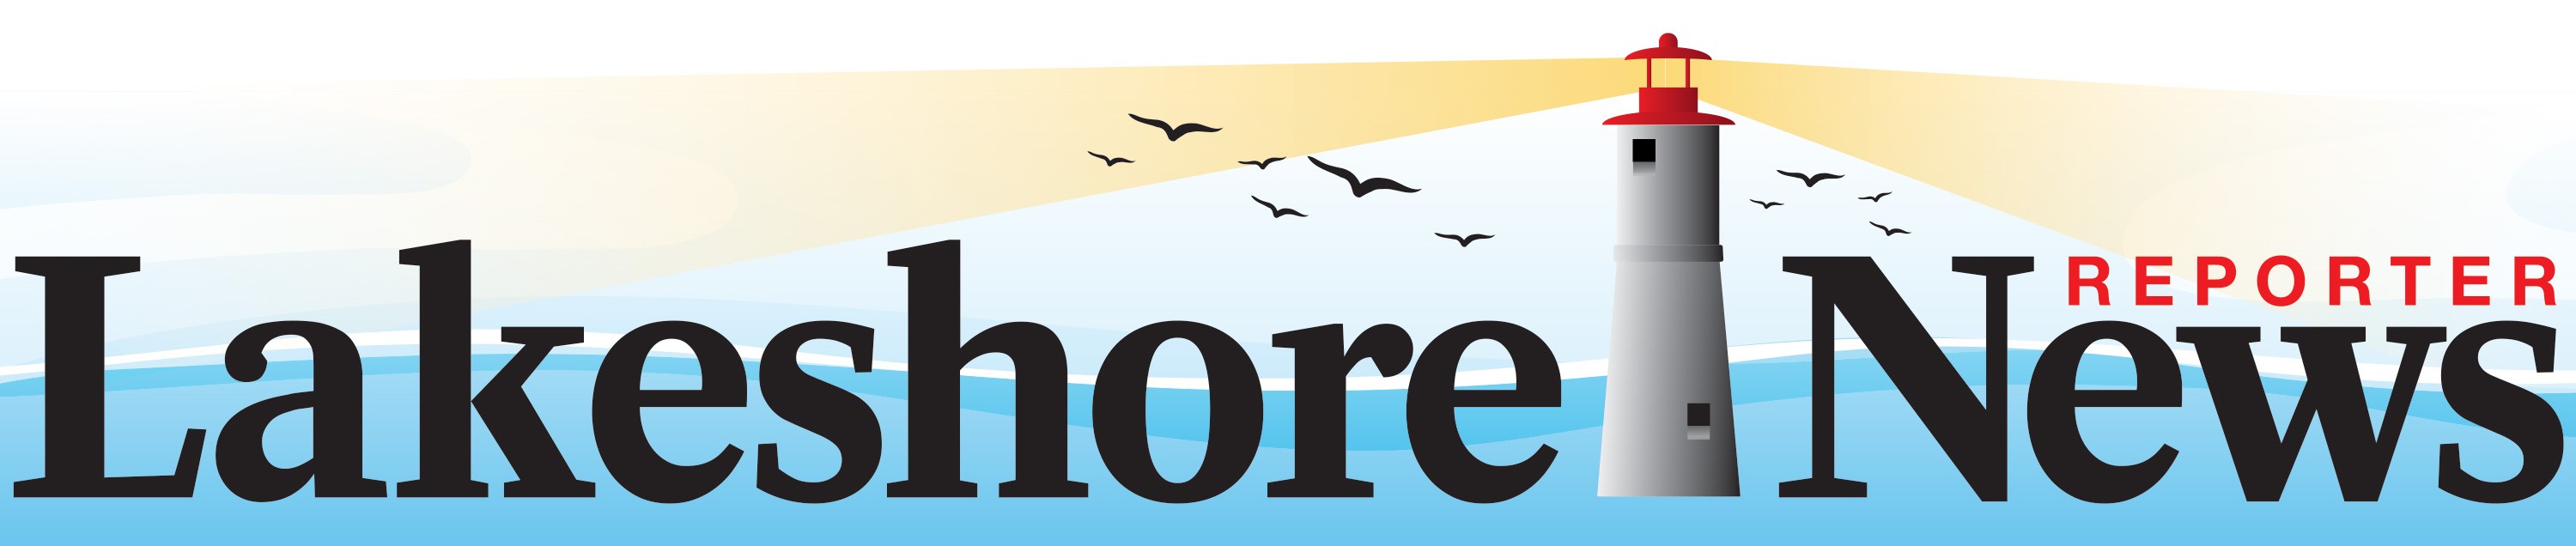 Lakeshore News Reporter logo